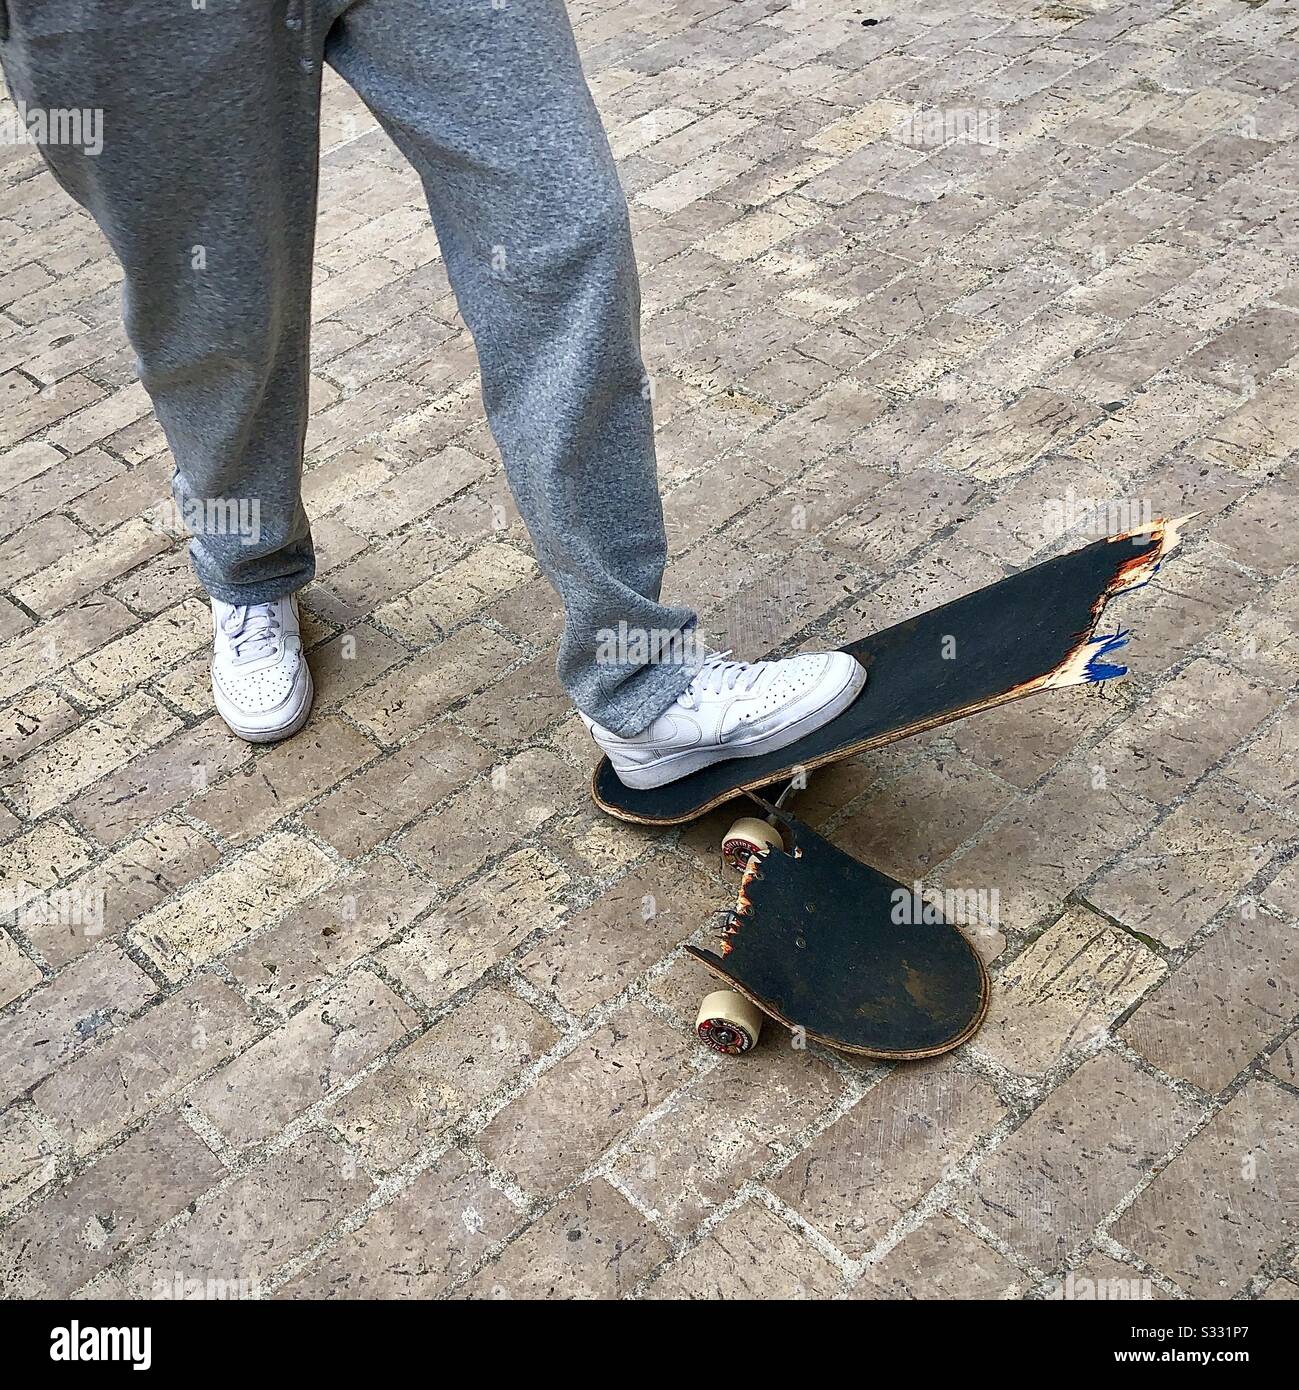 Teenager with his broken skateboard. Stock Photo